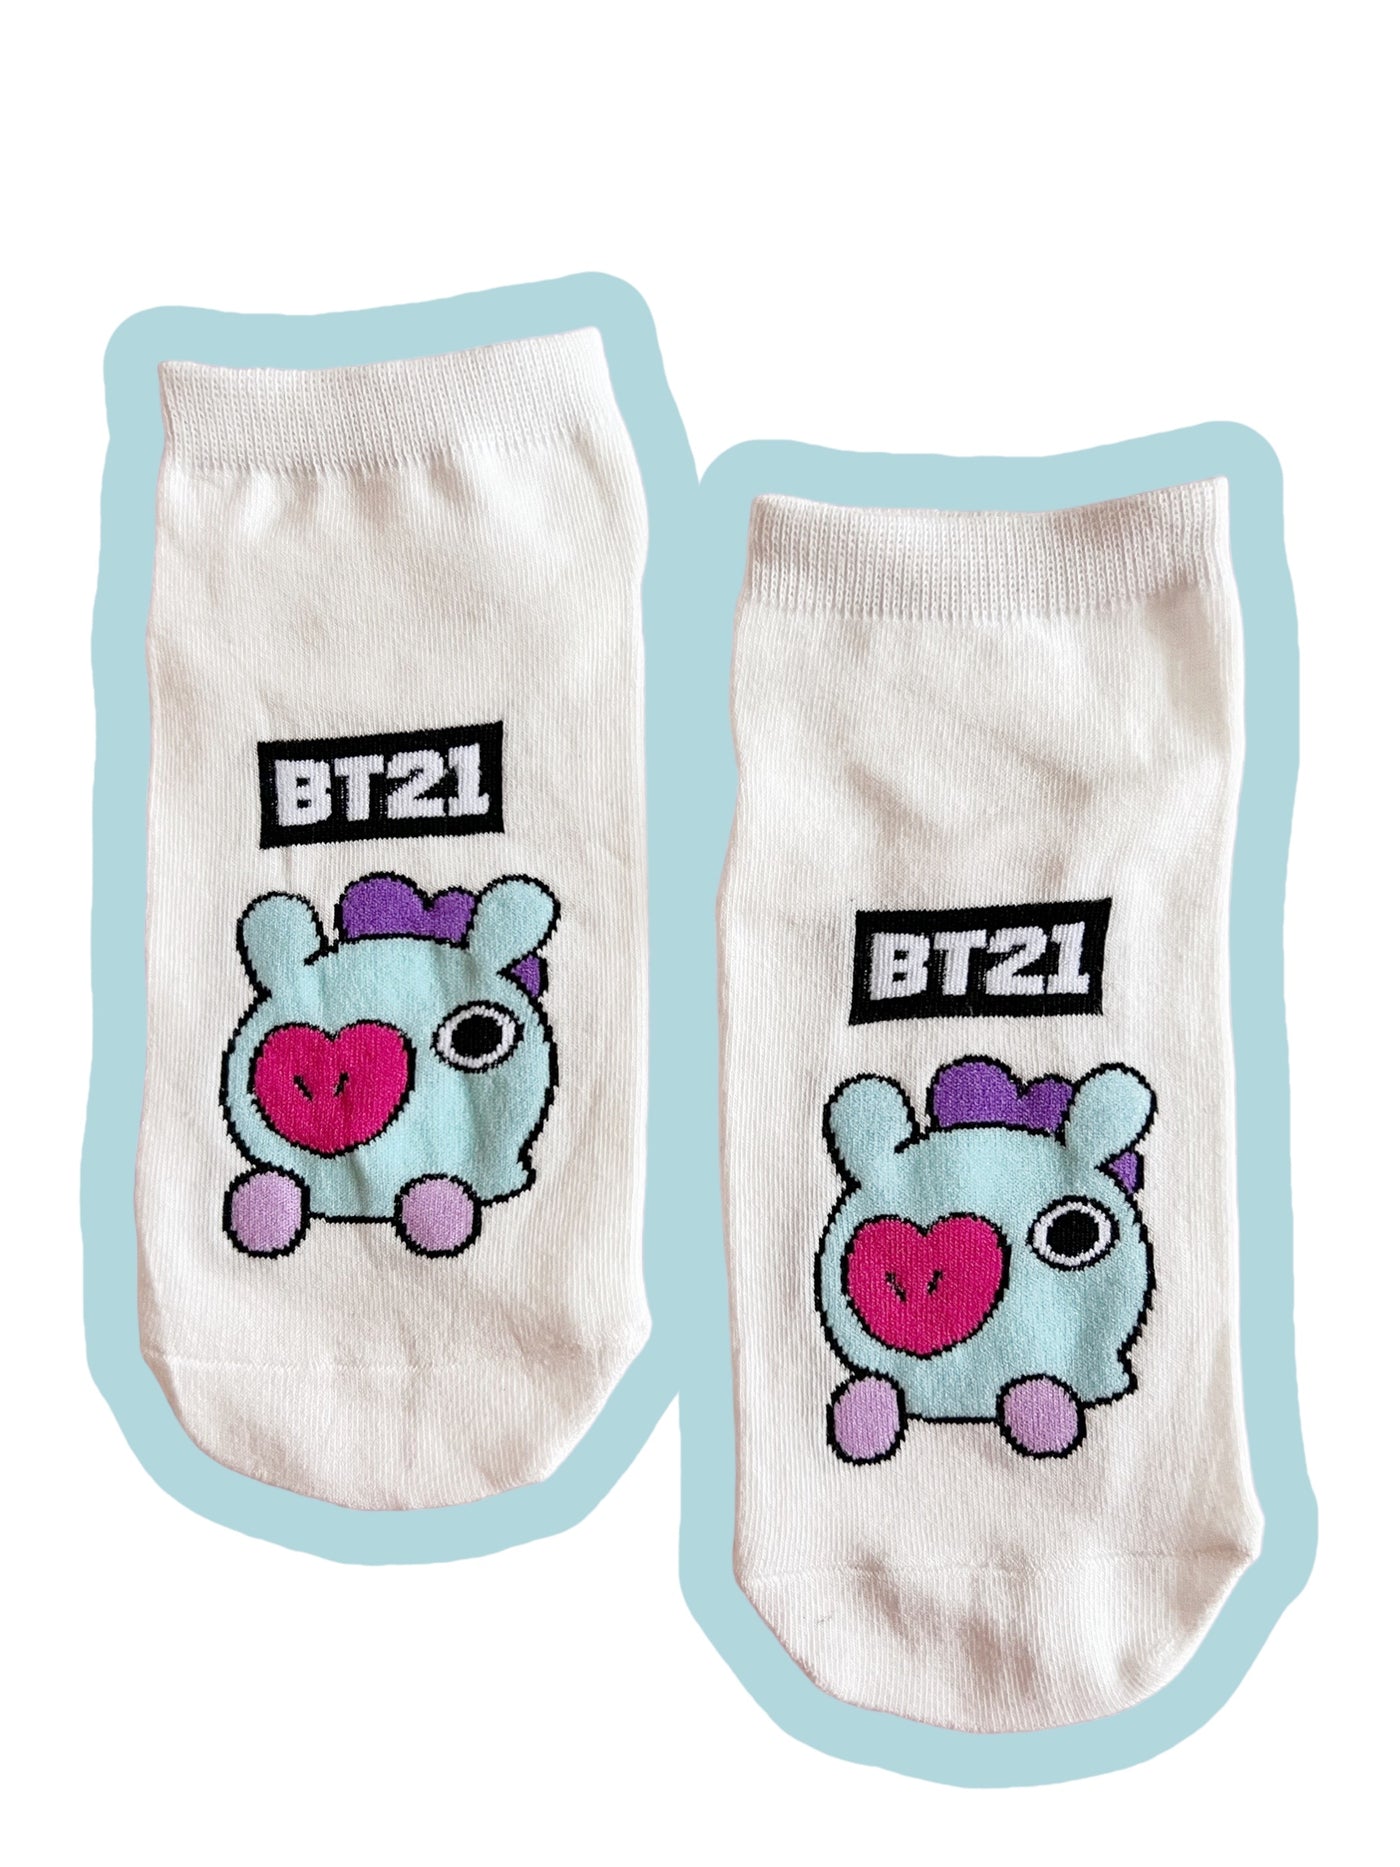 Babies Bts21 Socks 